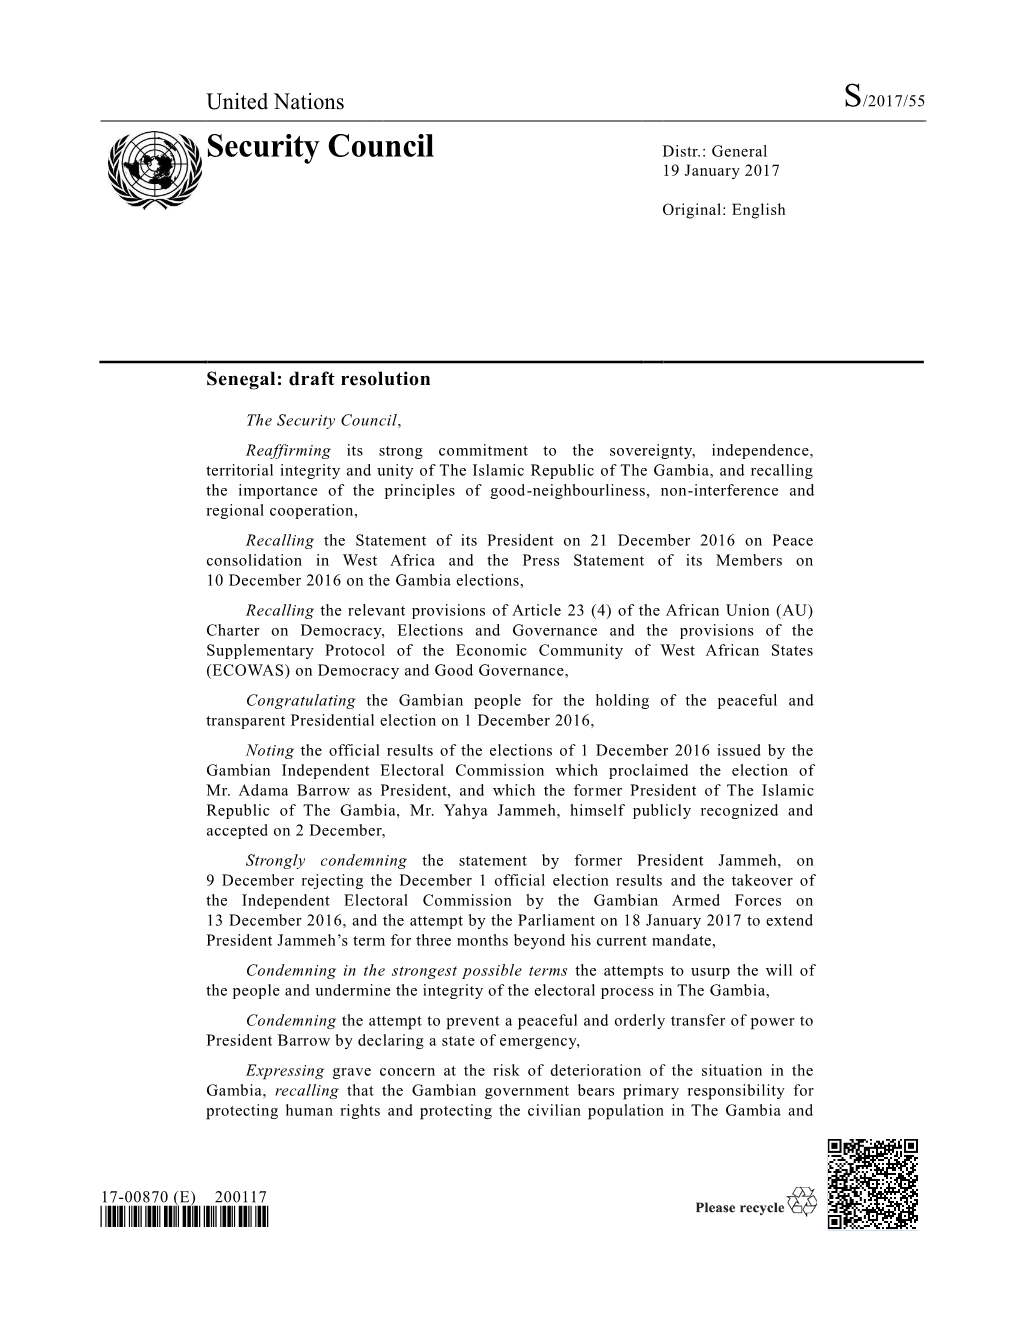 Security Council Distr.: General 19 January 2017